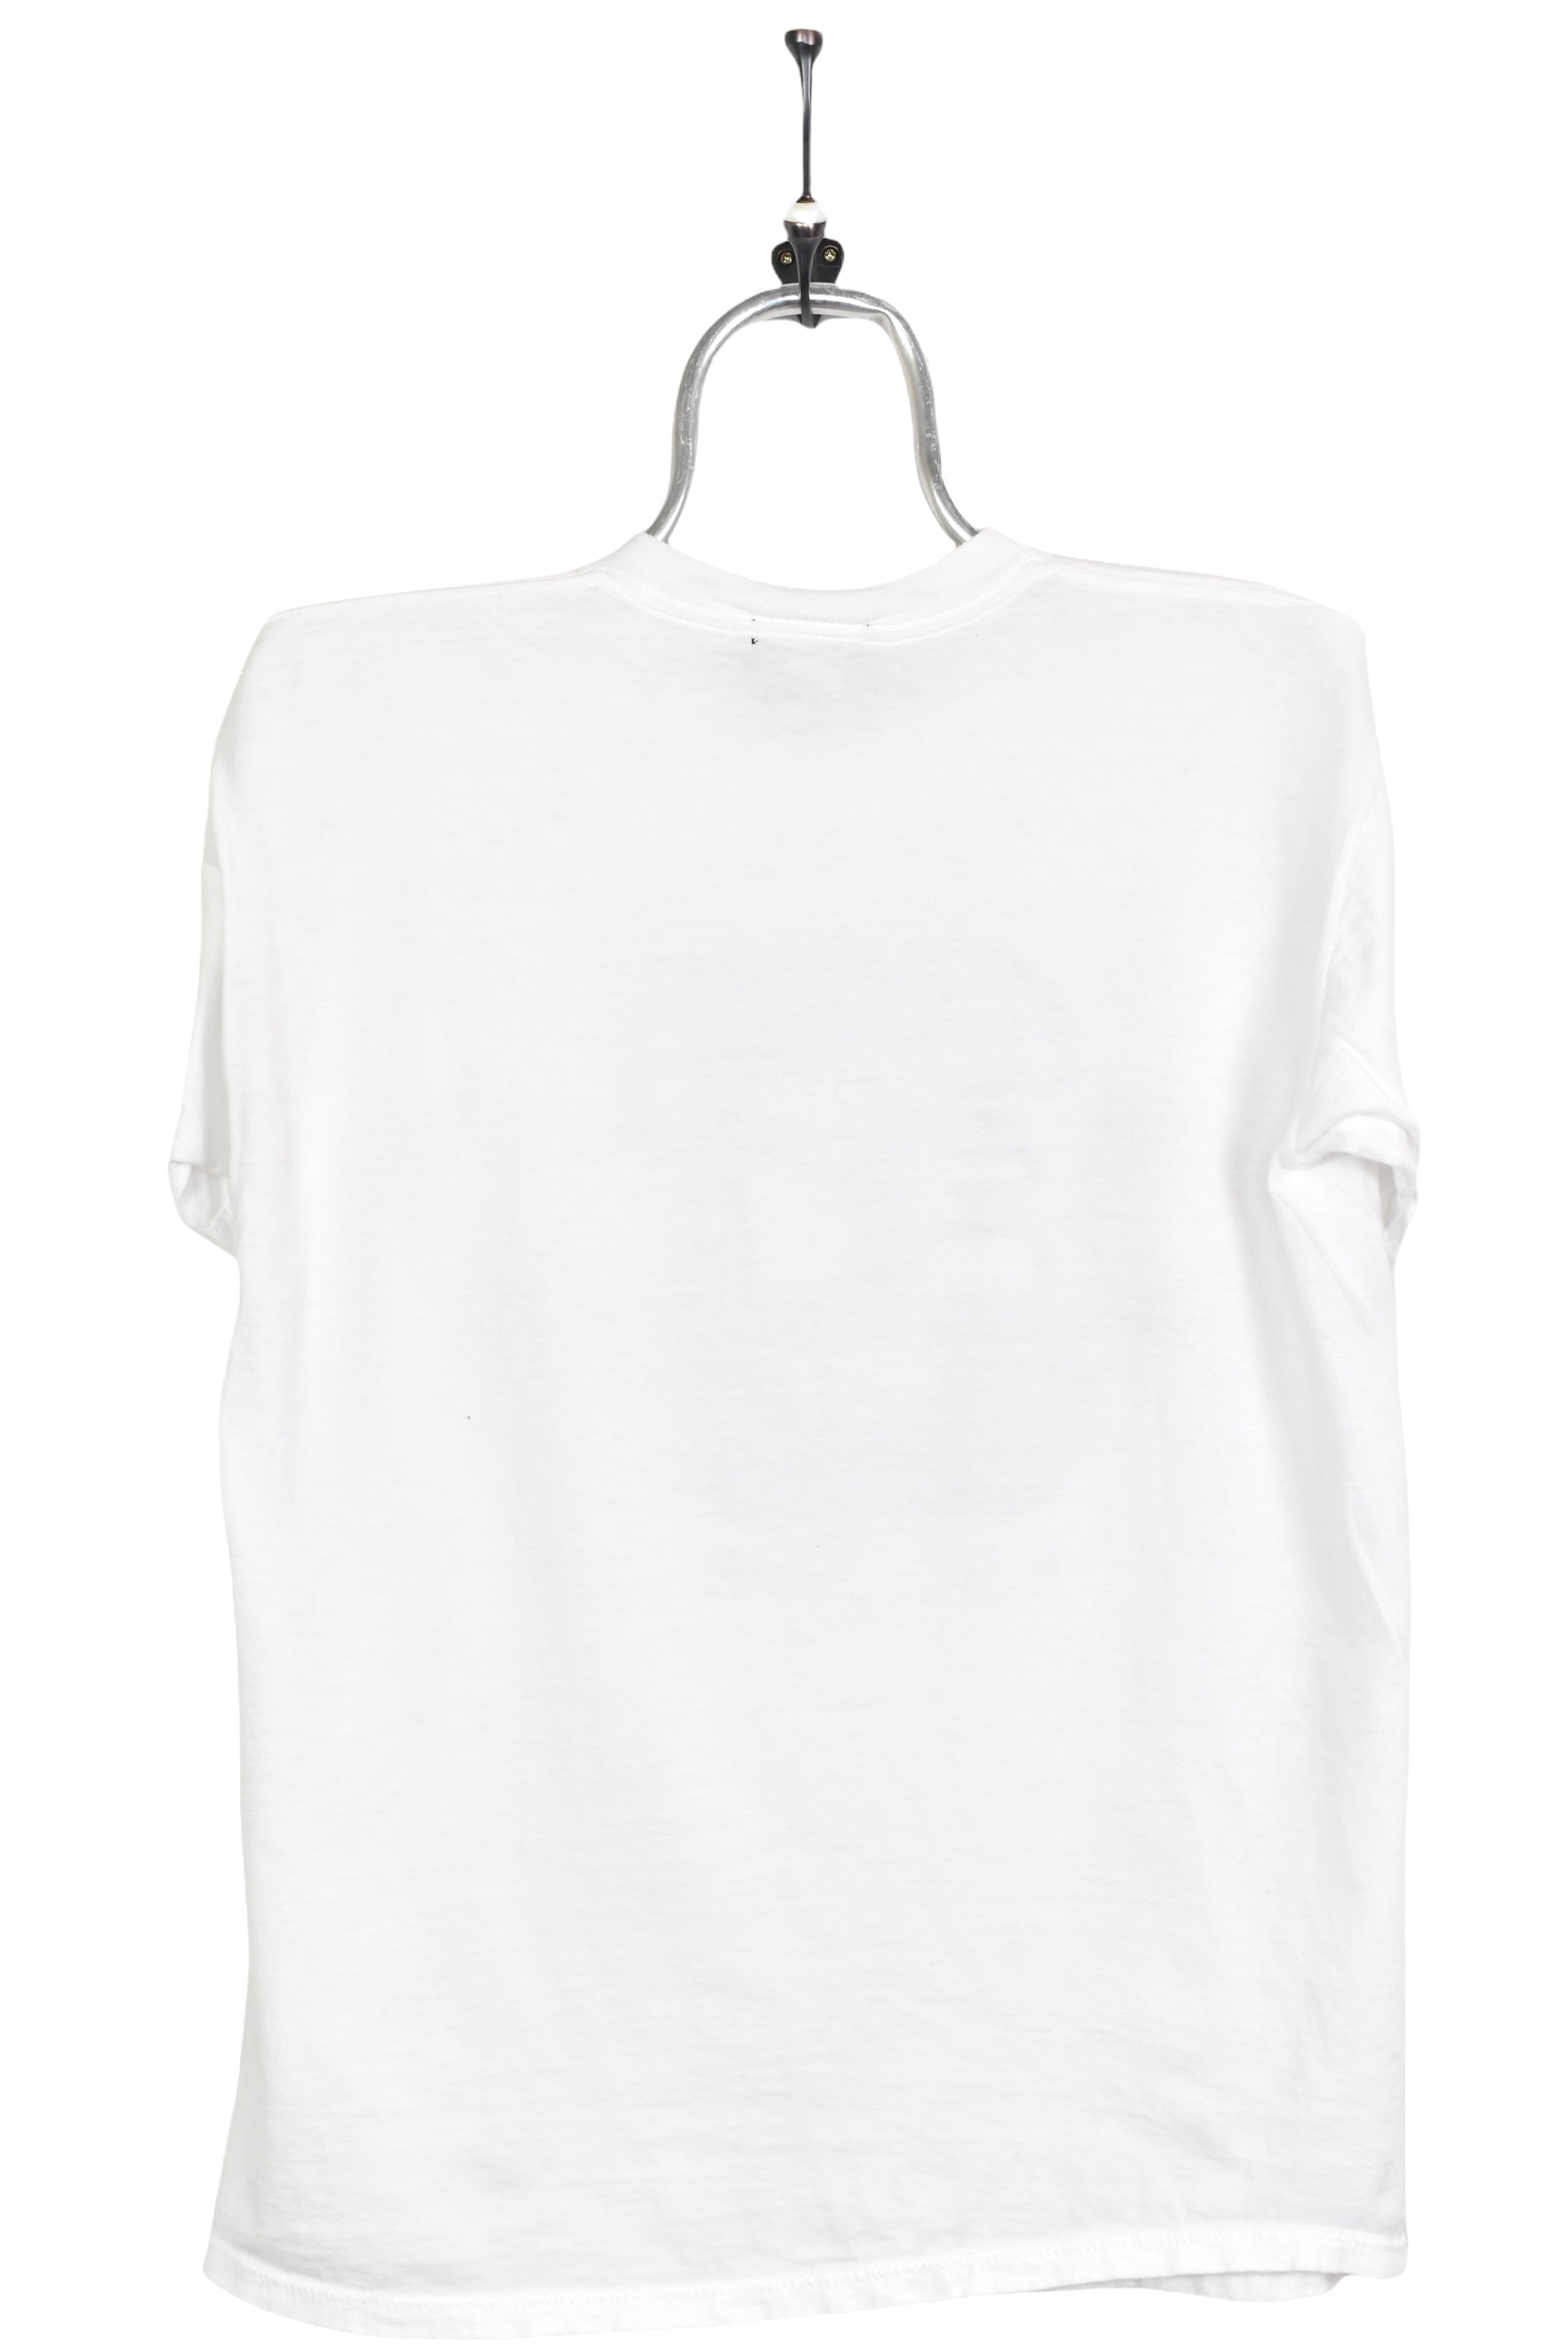 Vintage Ralph Lauren white t-shirt | Large RALPH LAUREN